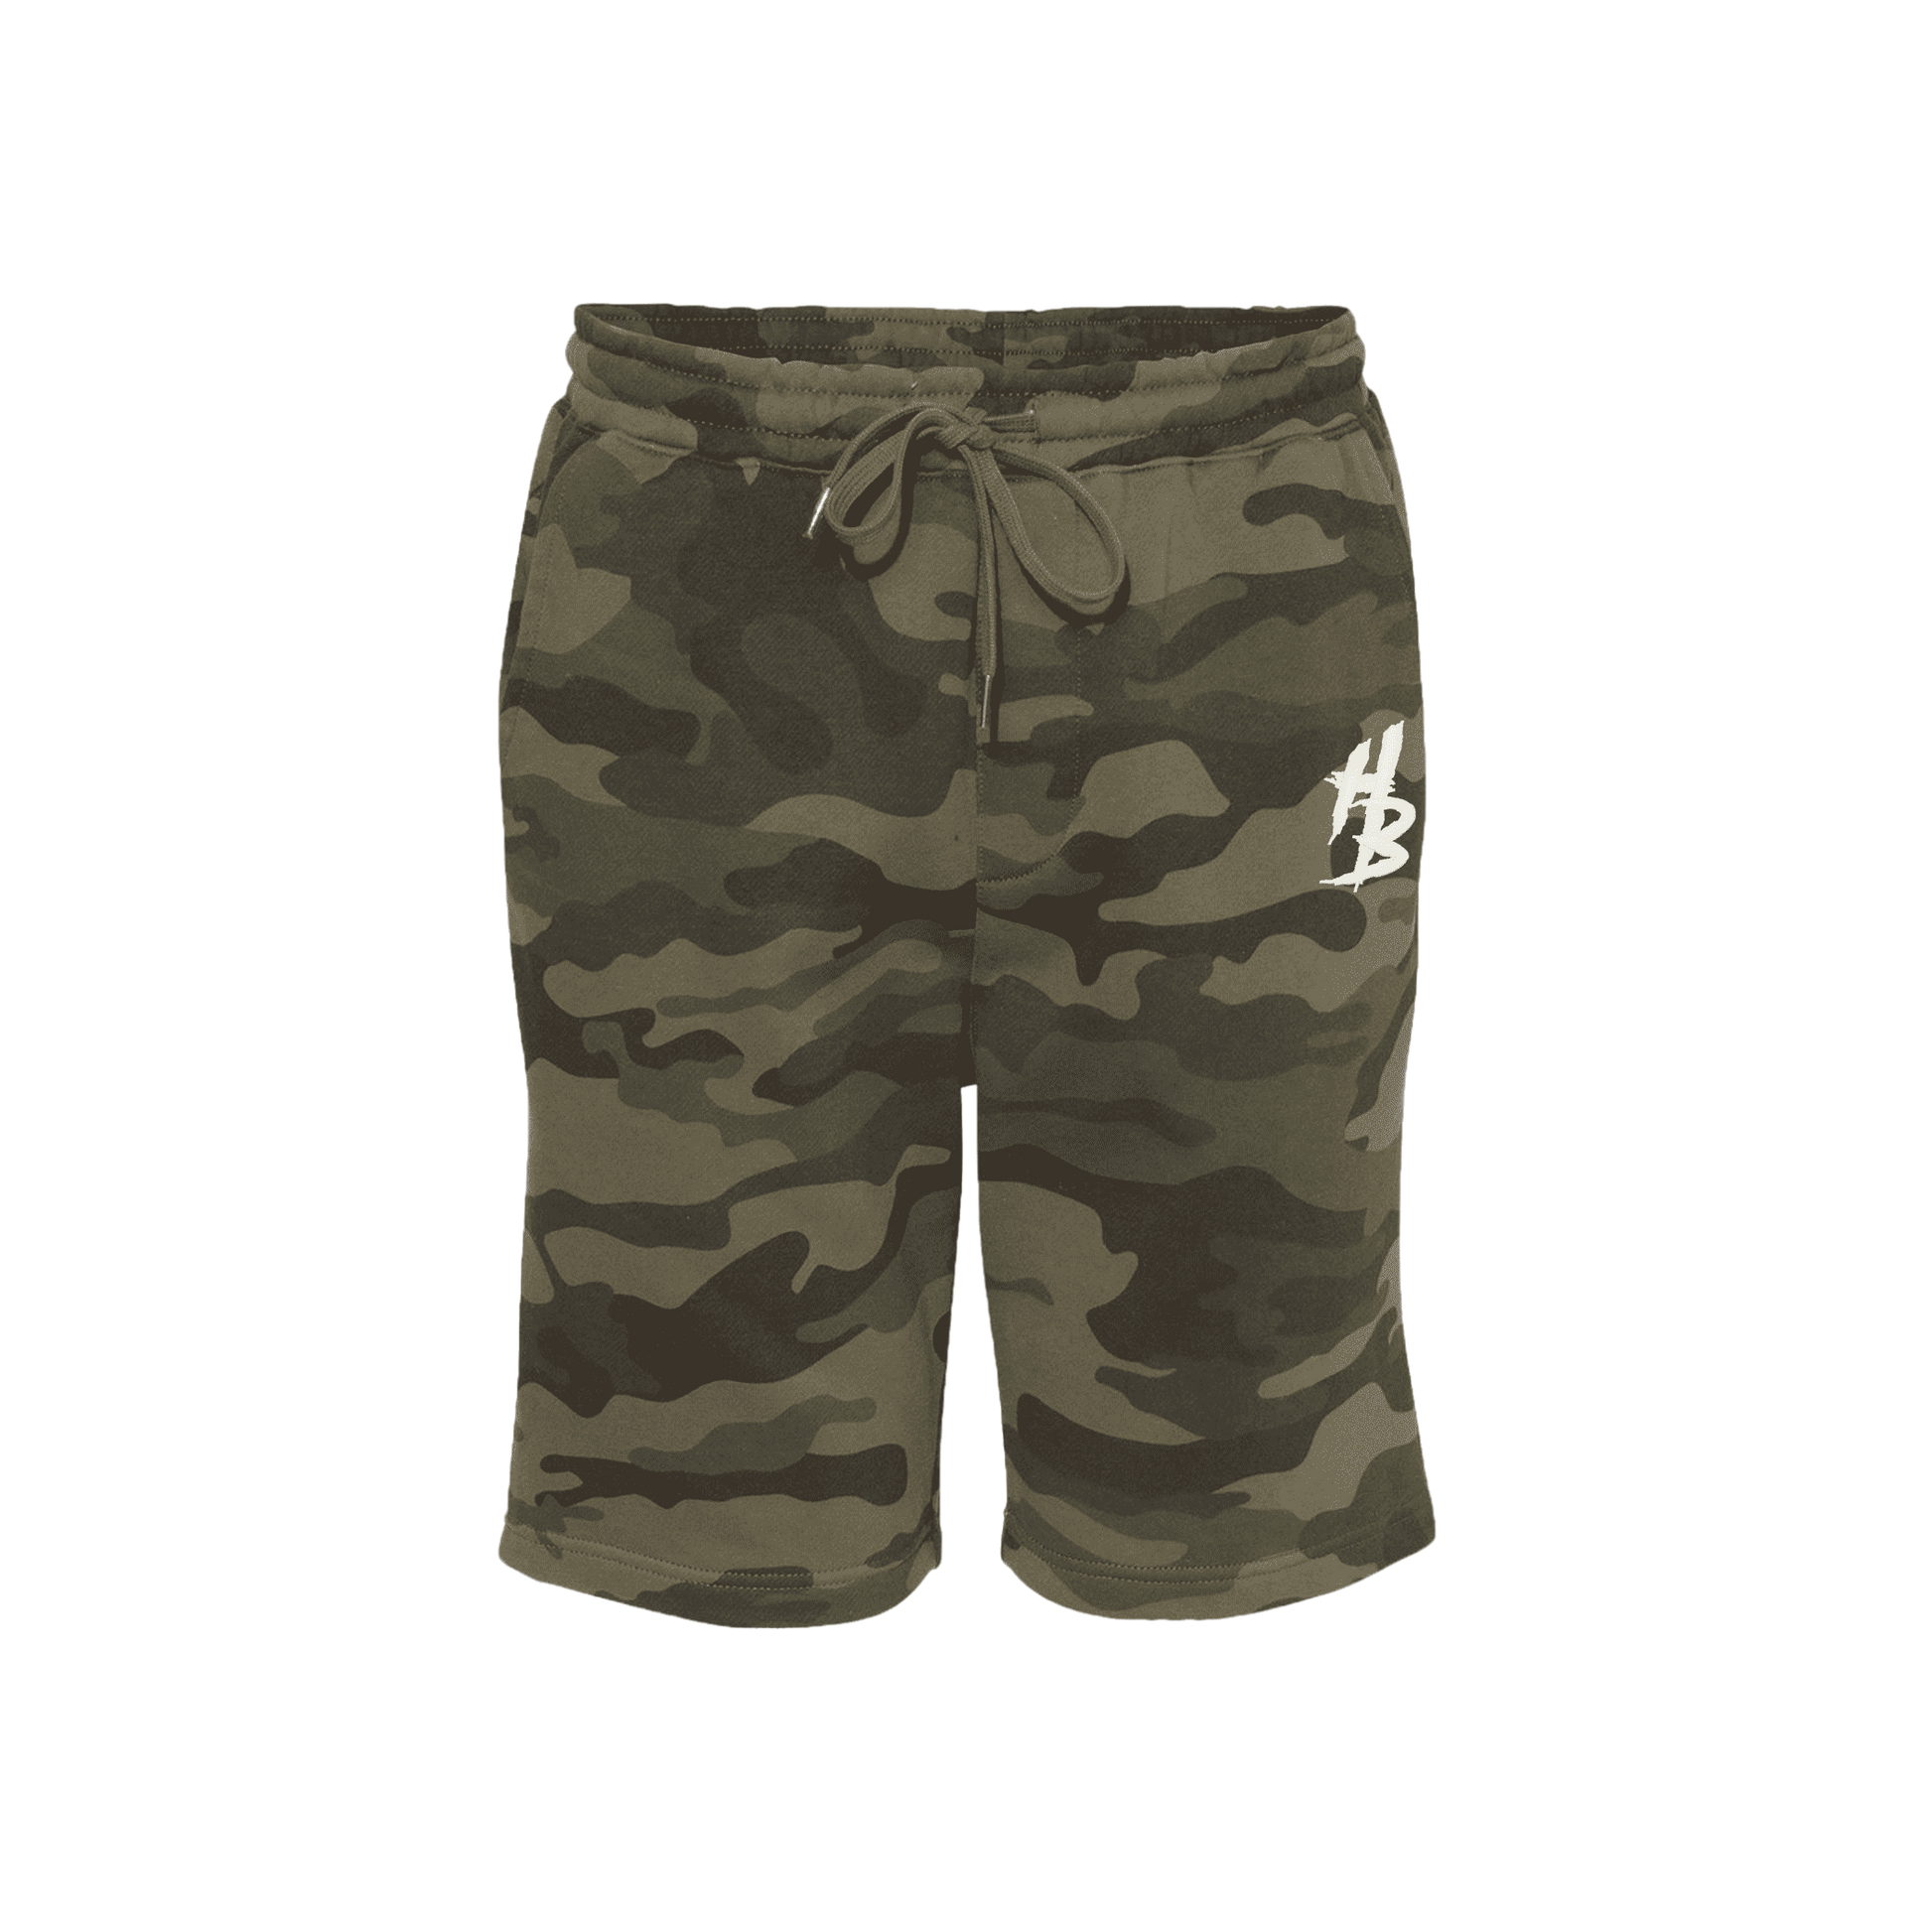 HB Forest Camo Shorts - hdlm.brgnd